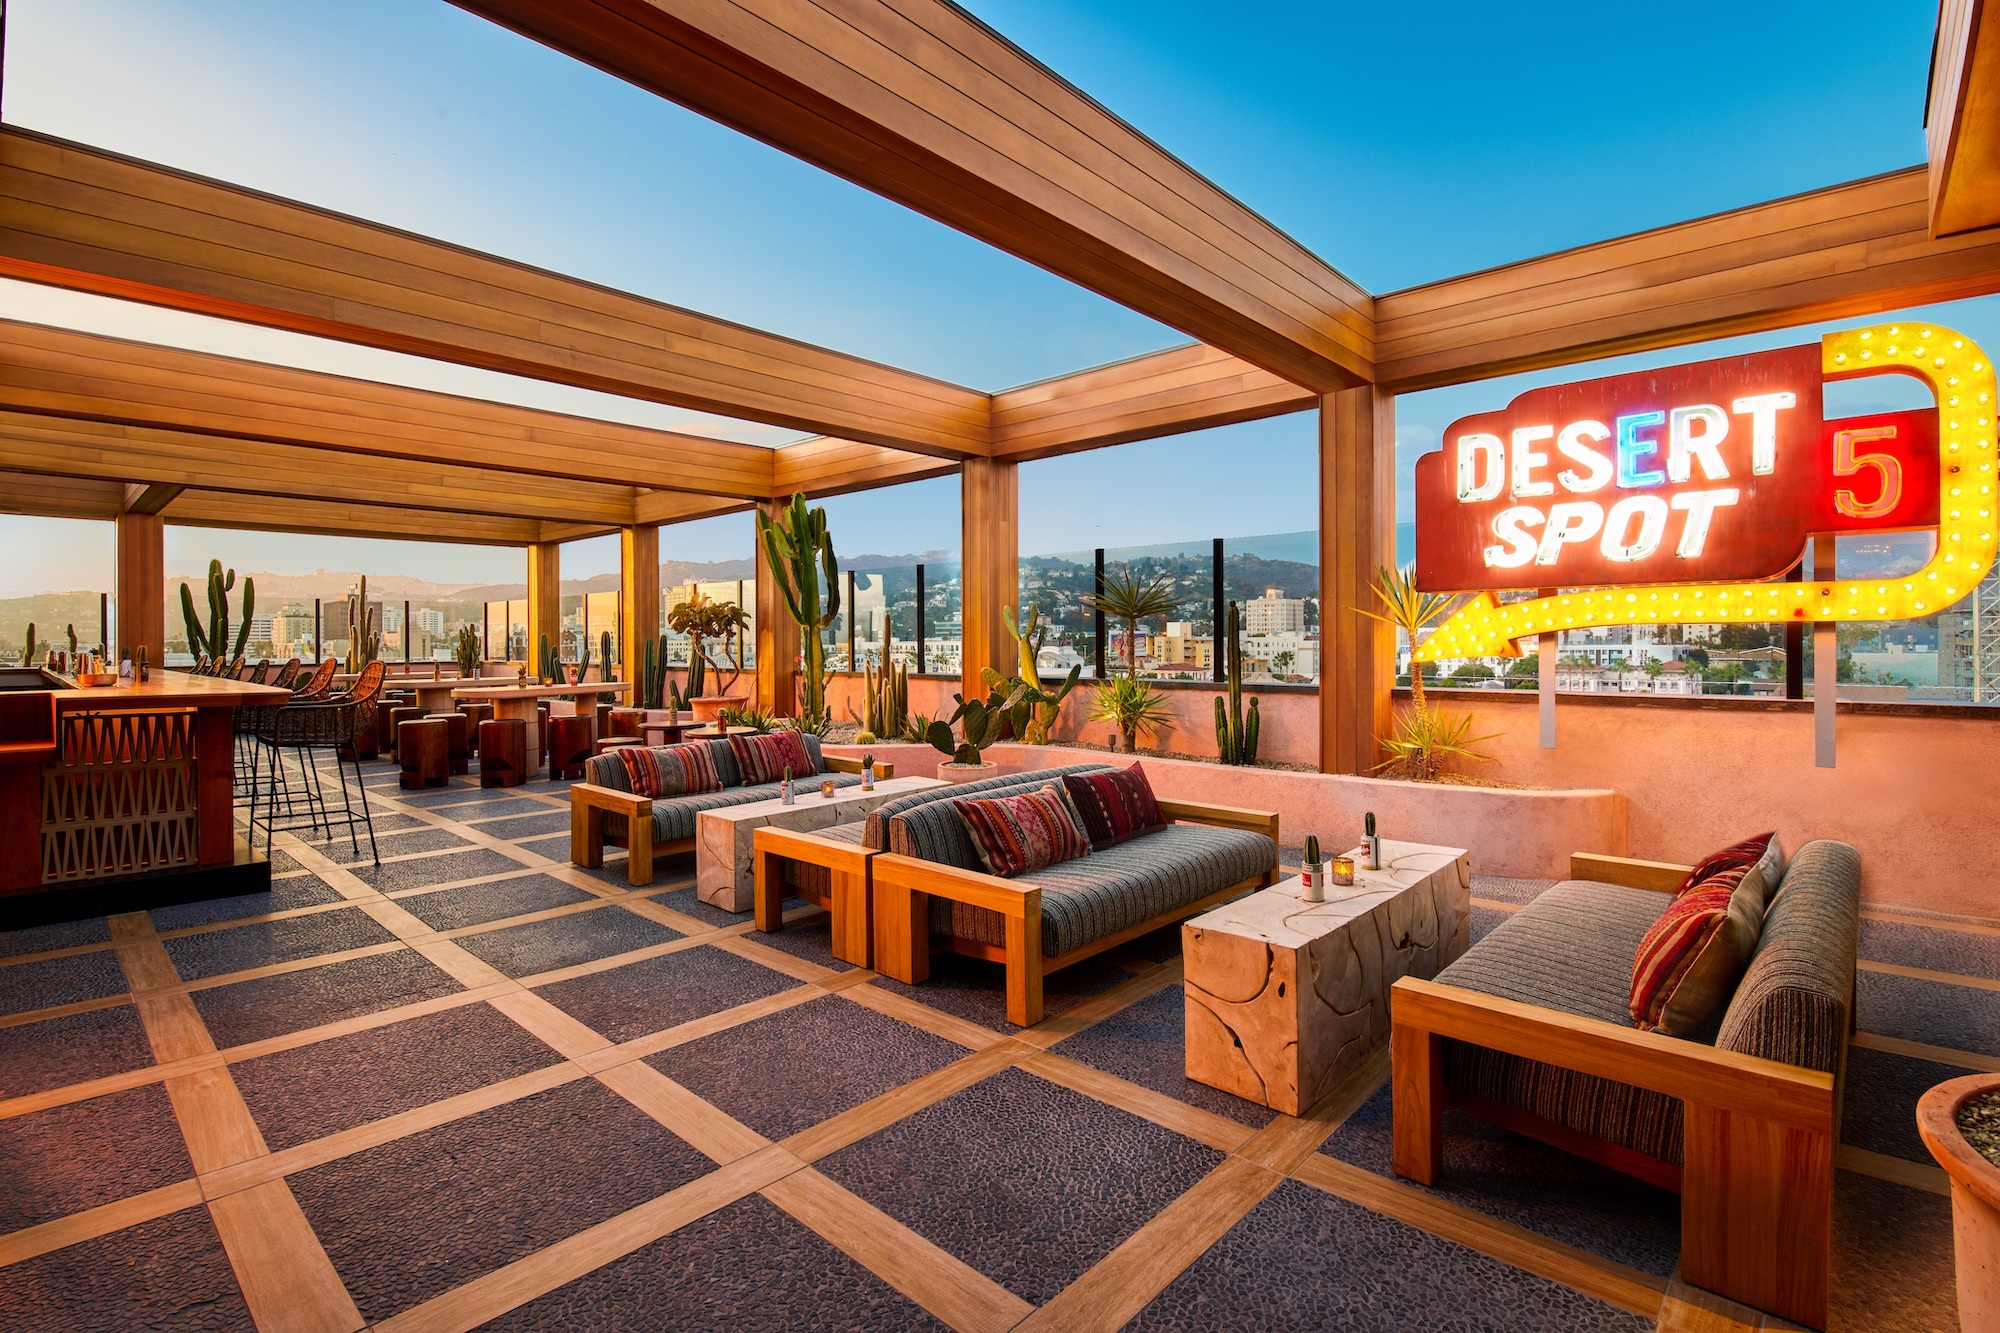 wetenschapper Onverenigbaar tarief Desert 5 Spot is the least douchey new Hollywood rooftop bar